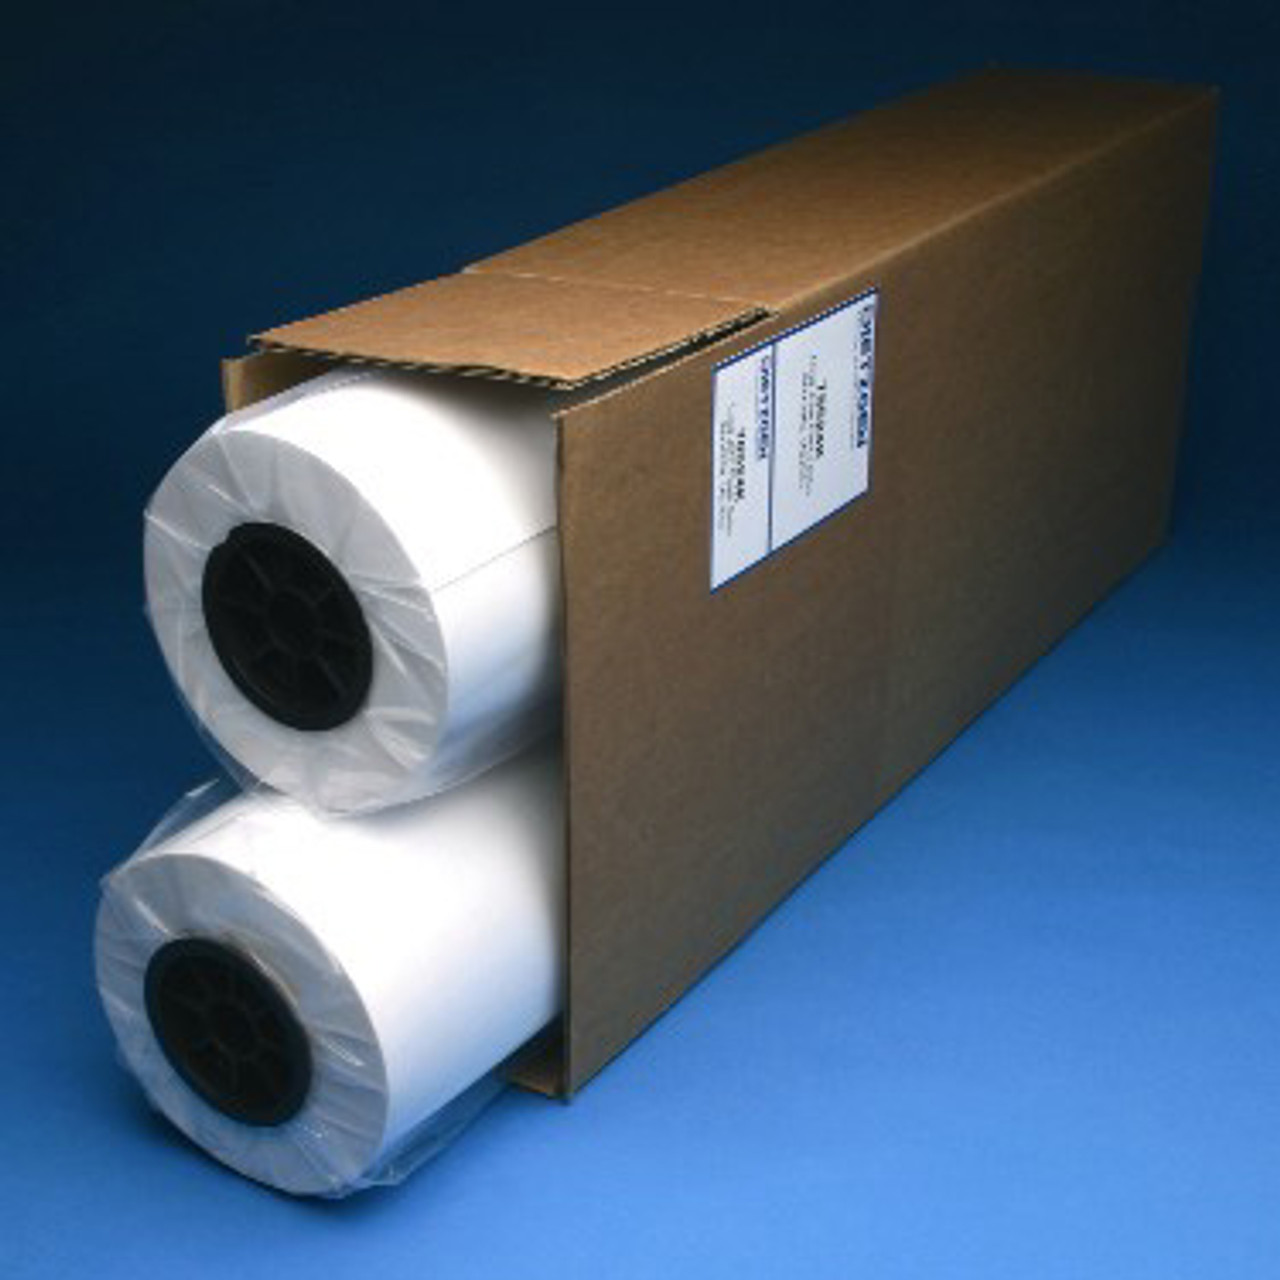 15 x 500' 20 lb Engineering Bond Plotter Paper, 4 Rolls/Case, #AEP1550020W4